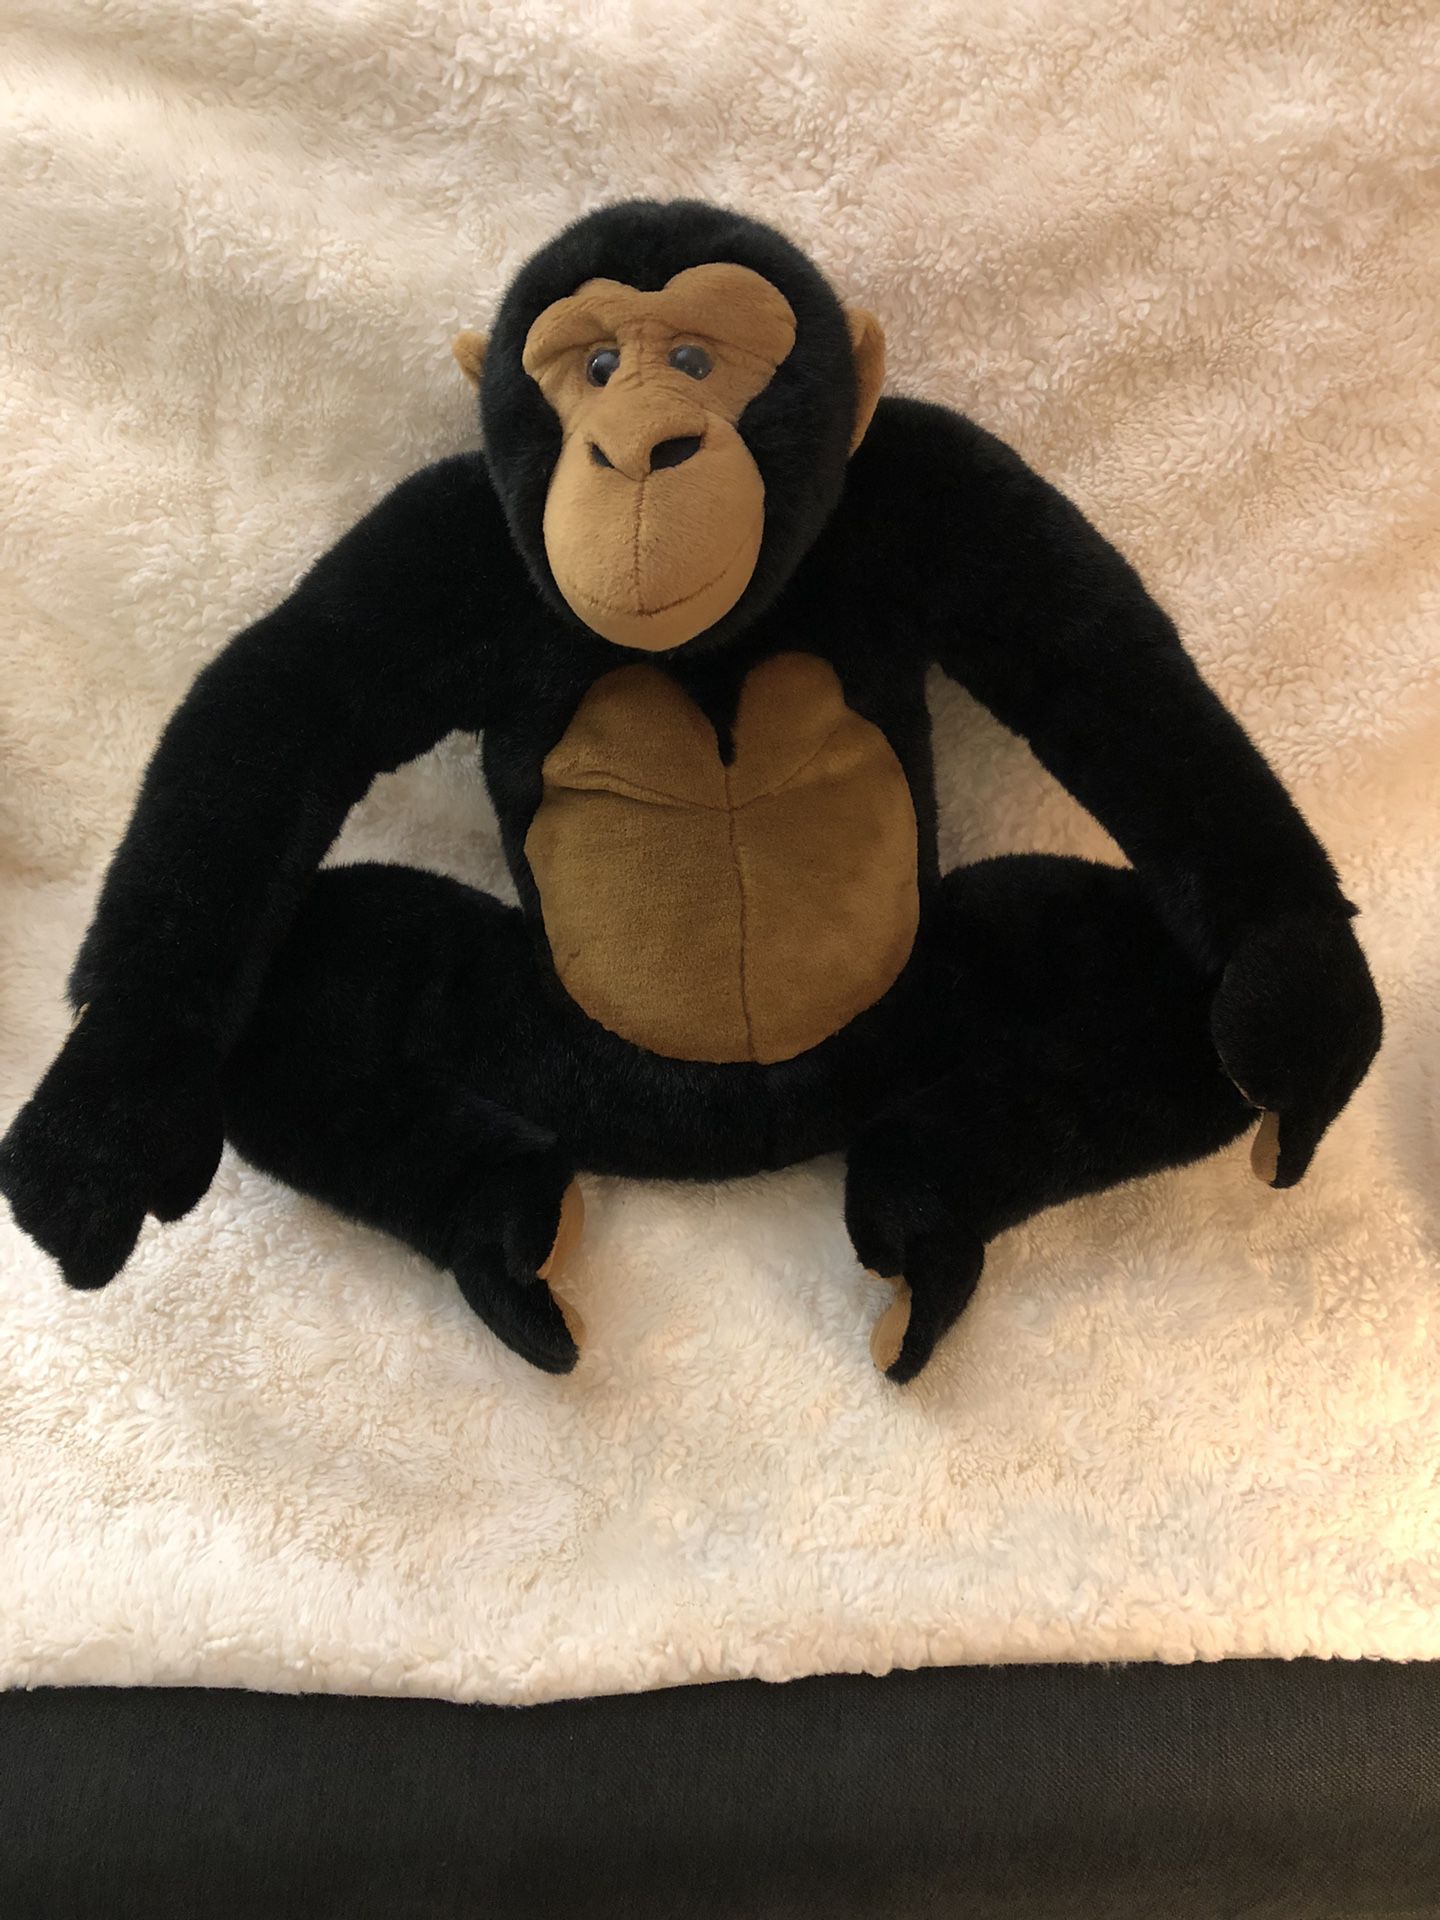 E & J Classic Limited Prima Collection Very Plush Black & Brown Monkey/Ape 